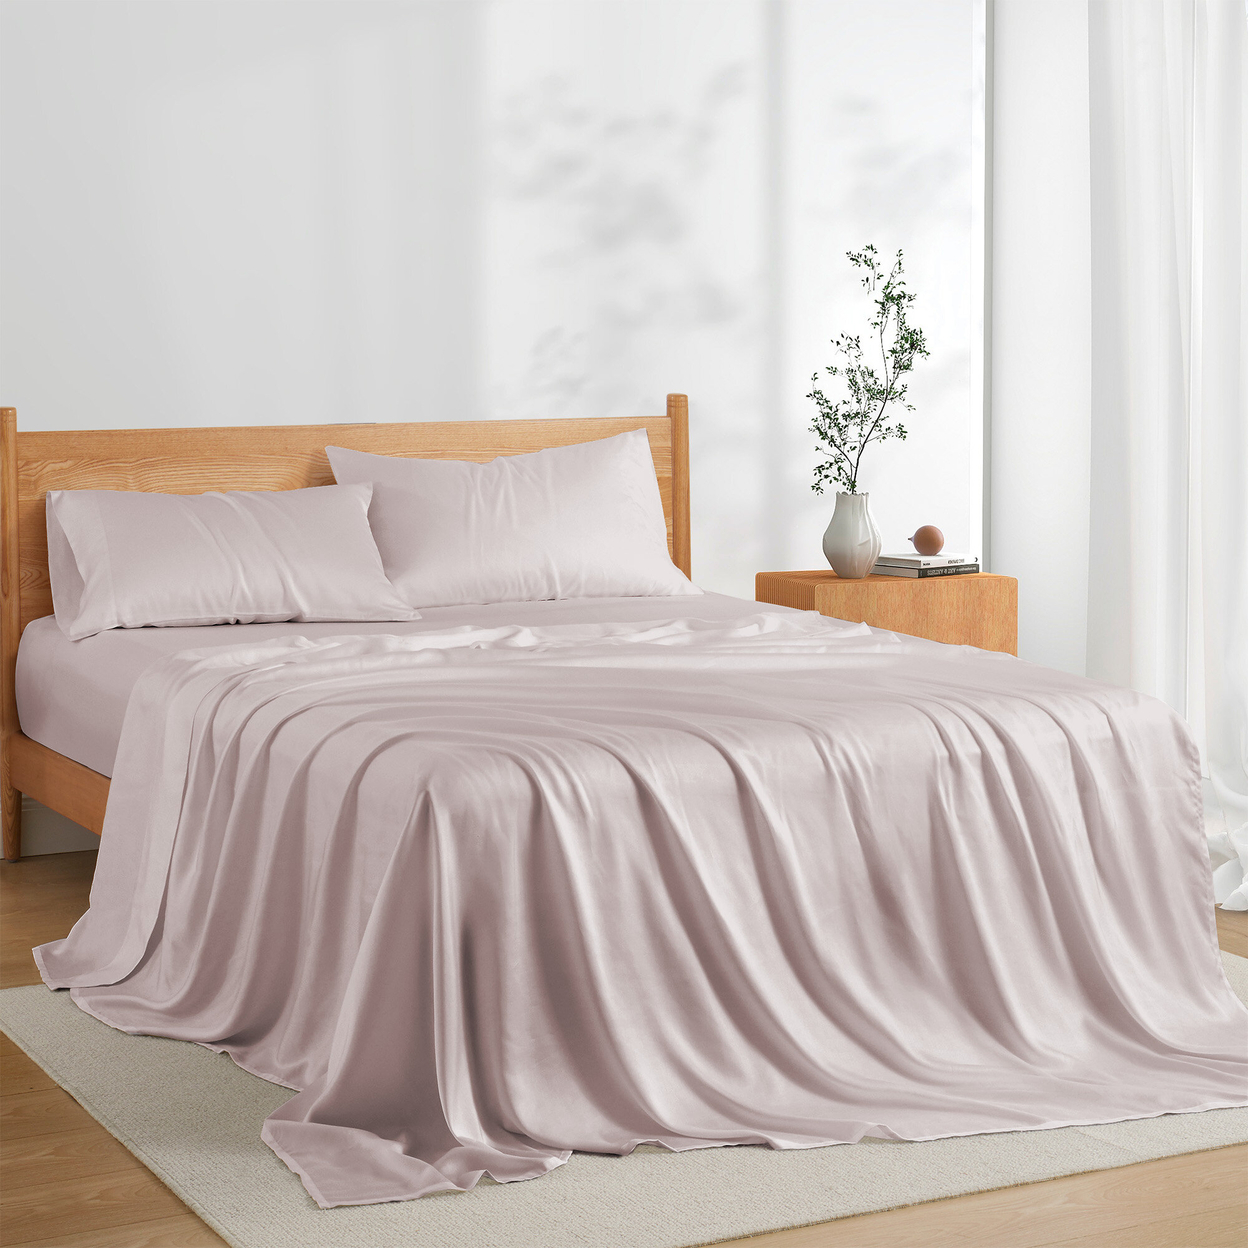 Silky Soft TENCELâ¢ Lyocell Cooling Sheet Set-Breathability And Moisture-wicking Bedding Set - Primrose Pink, Queen